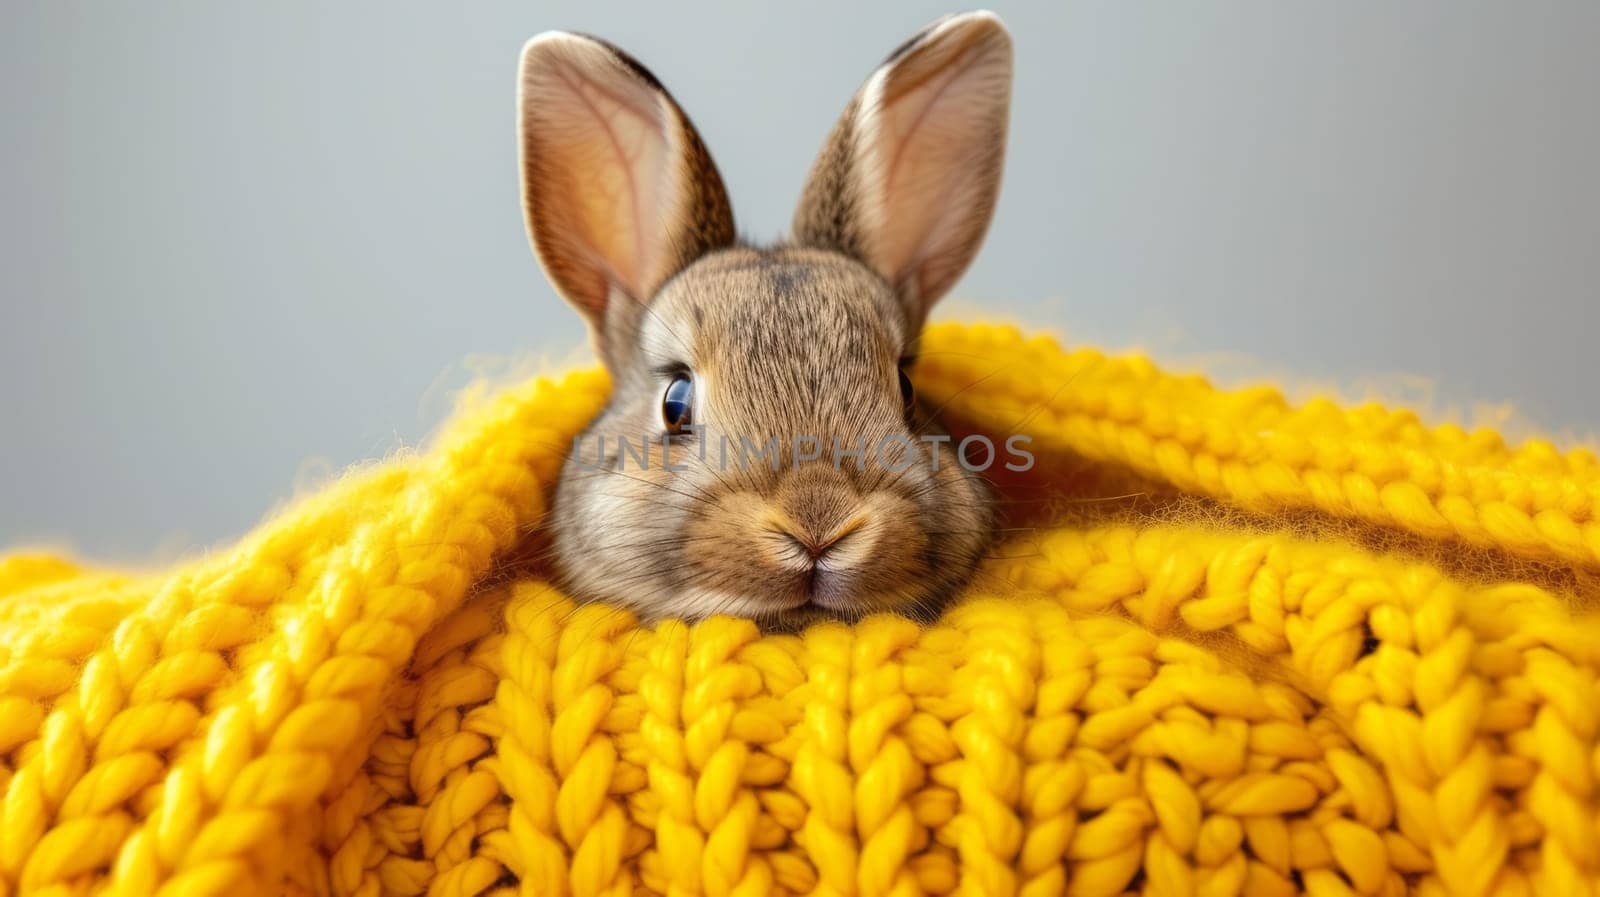 Cute Fluffy Easter Bunny in Yellow Blanket. Funny Rabbit Portrait by iliris